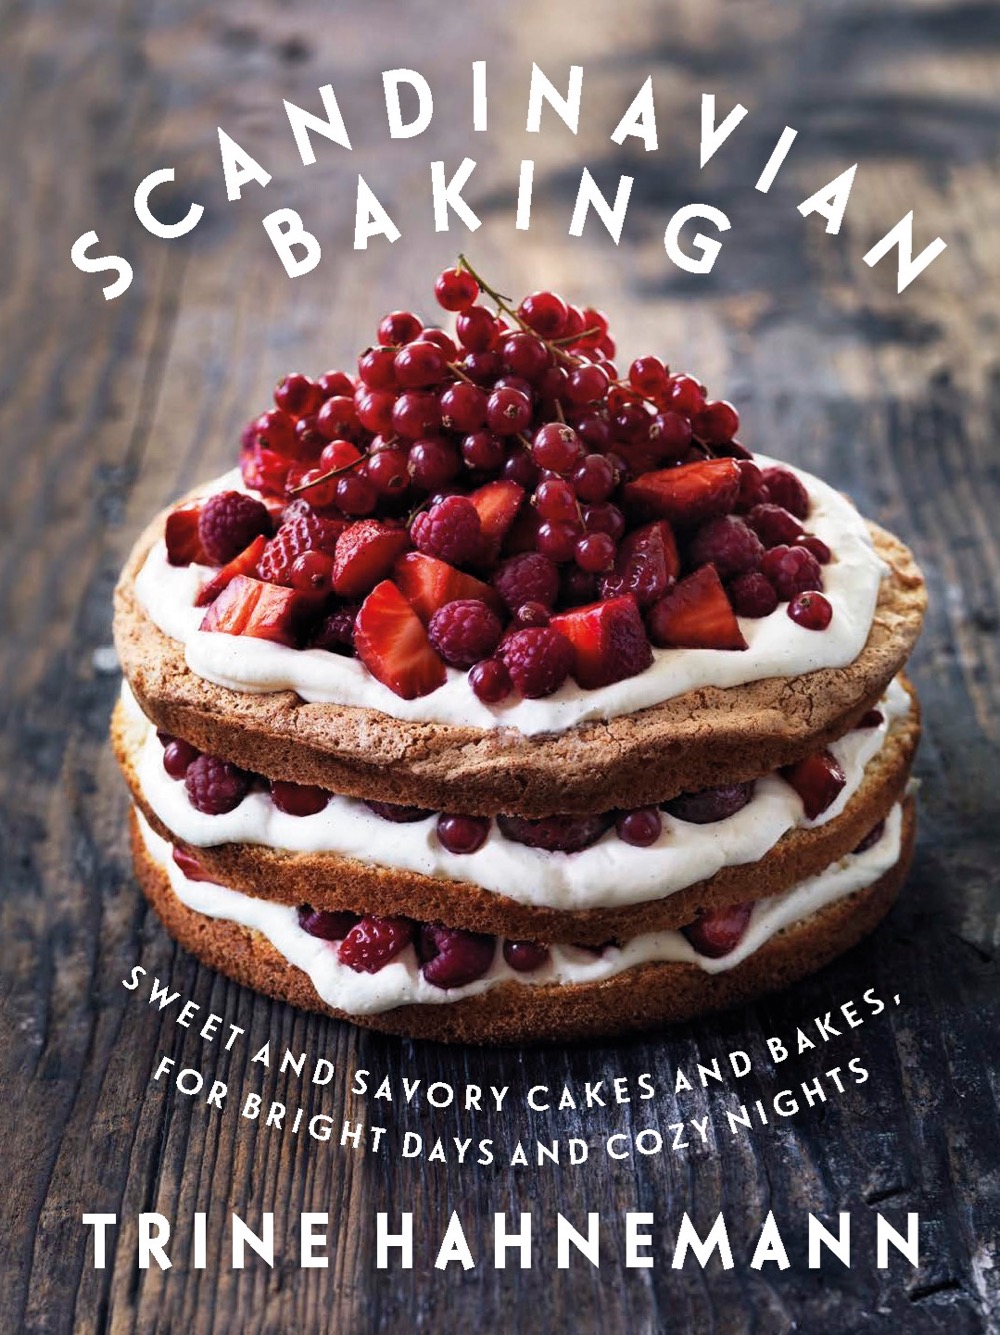 Scandinavian Baking by Trine Hahnemann